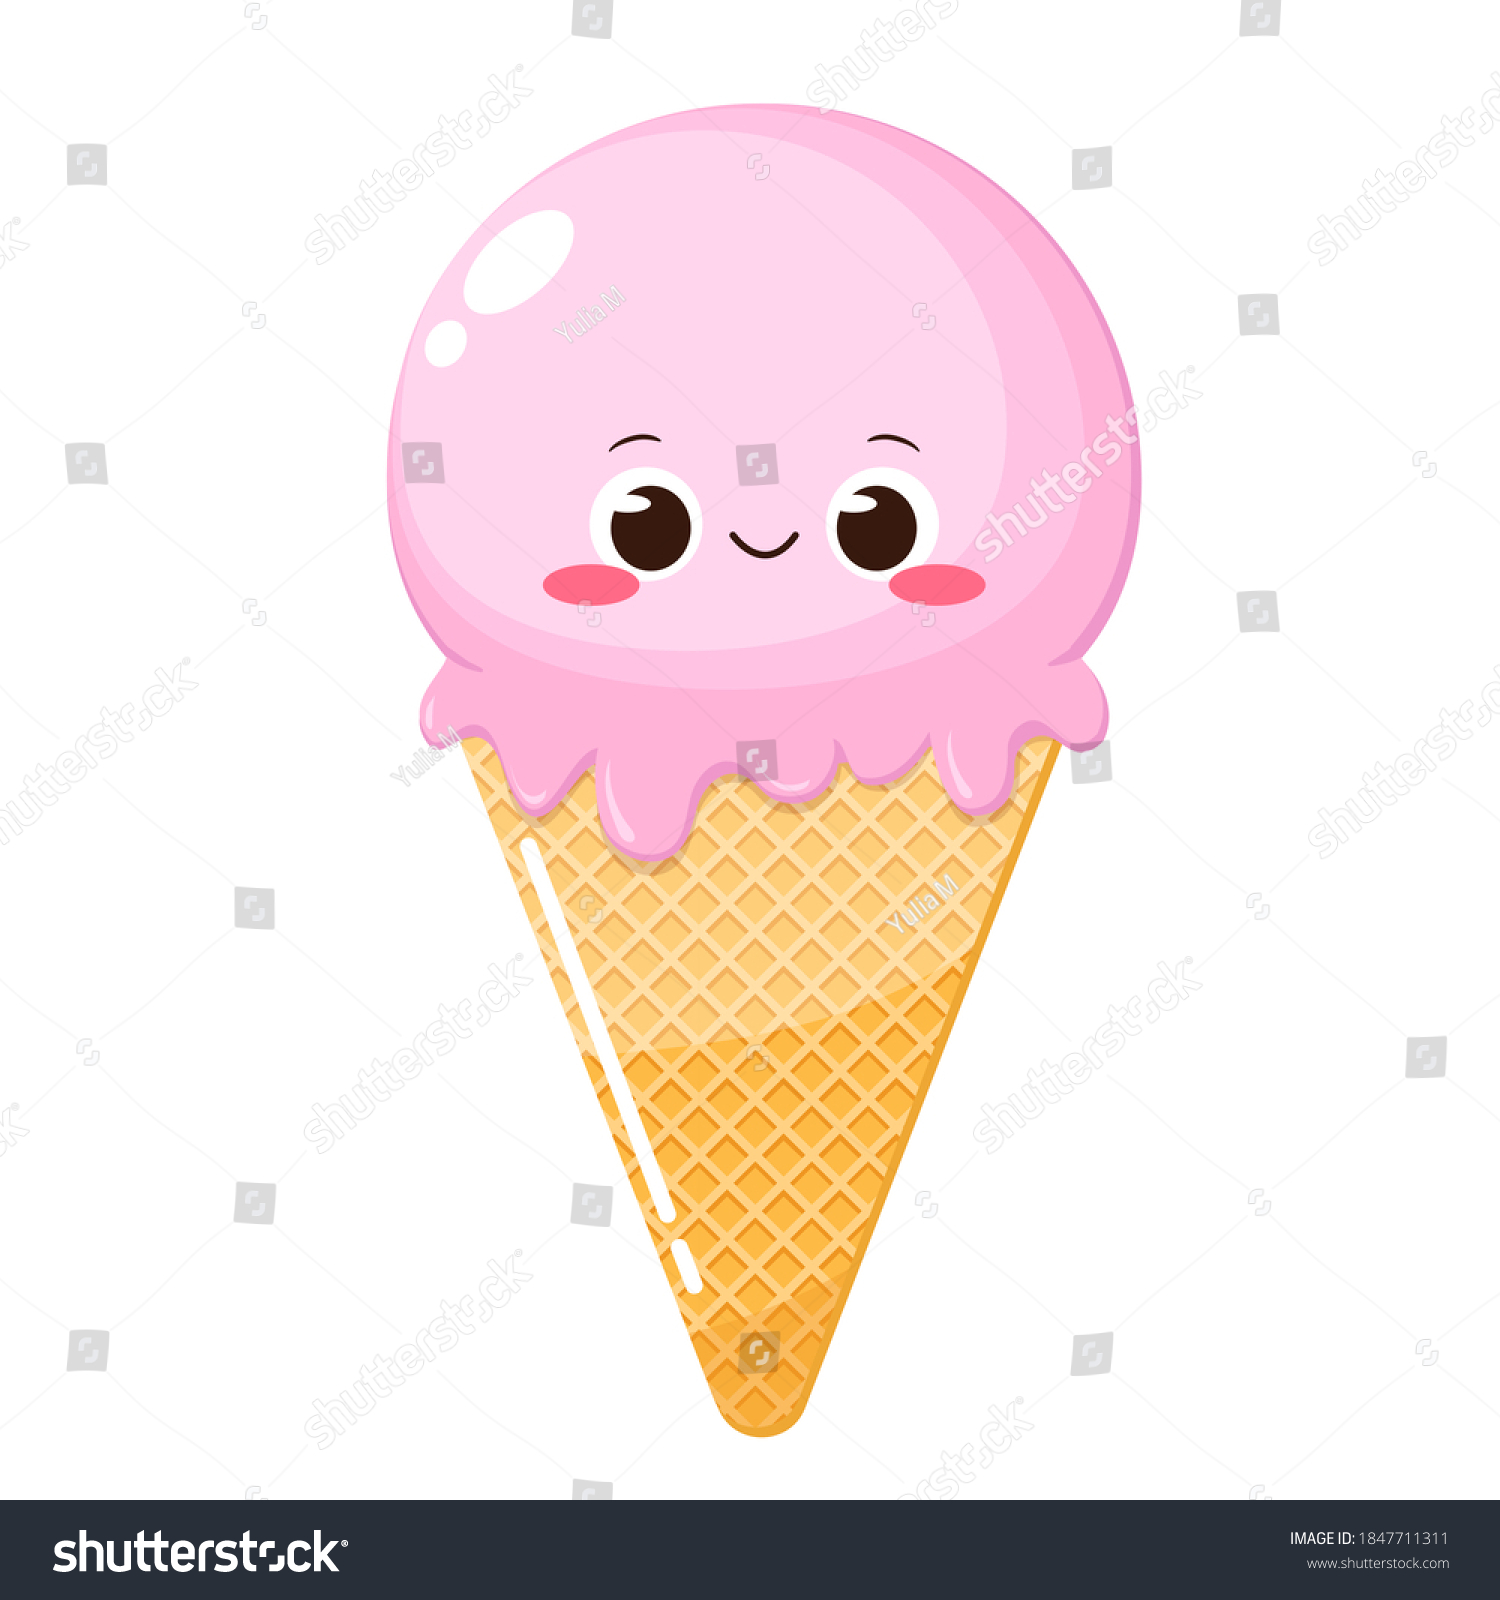 Cute Cartoon Icecream Funny Face Kawaii Stock Vector Royalty Free 1847711311 Shutterstock 5992